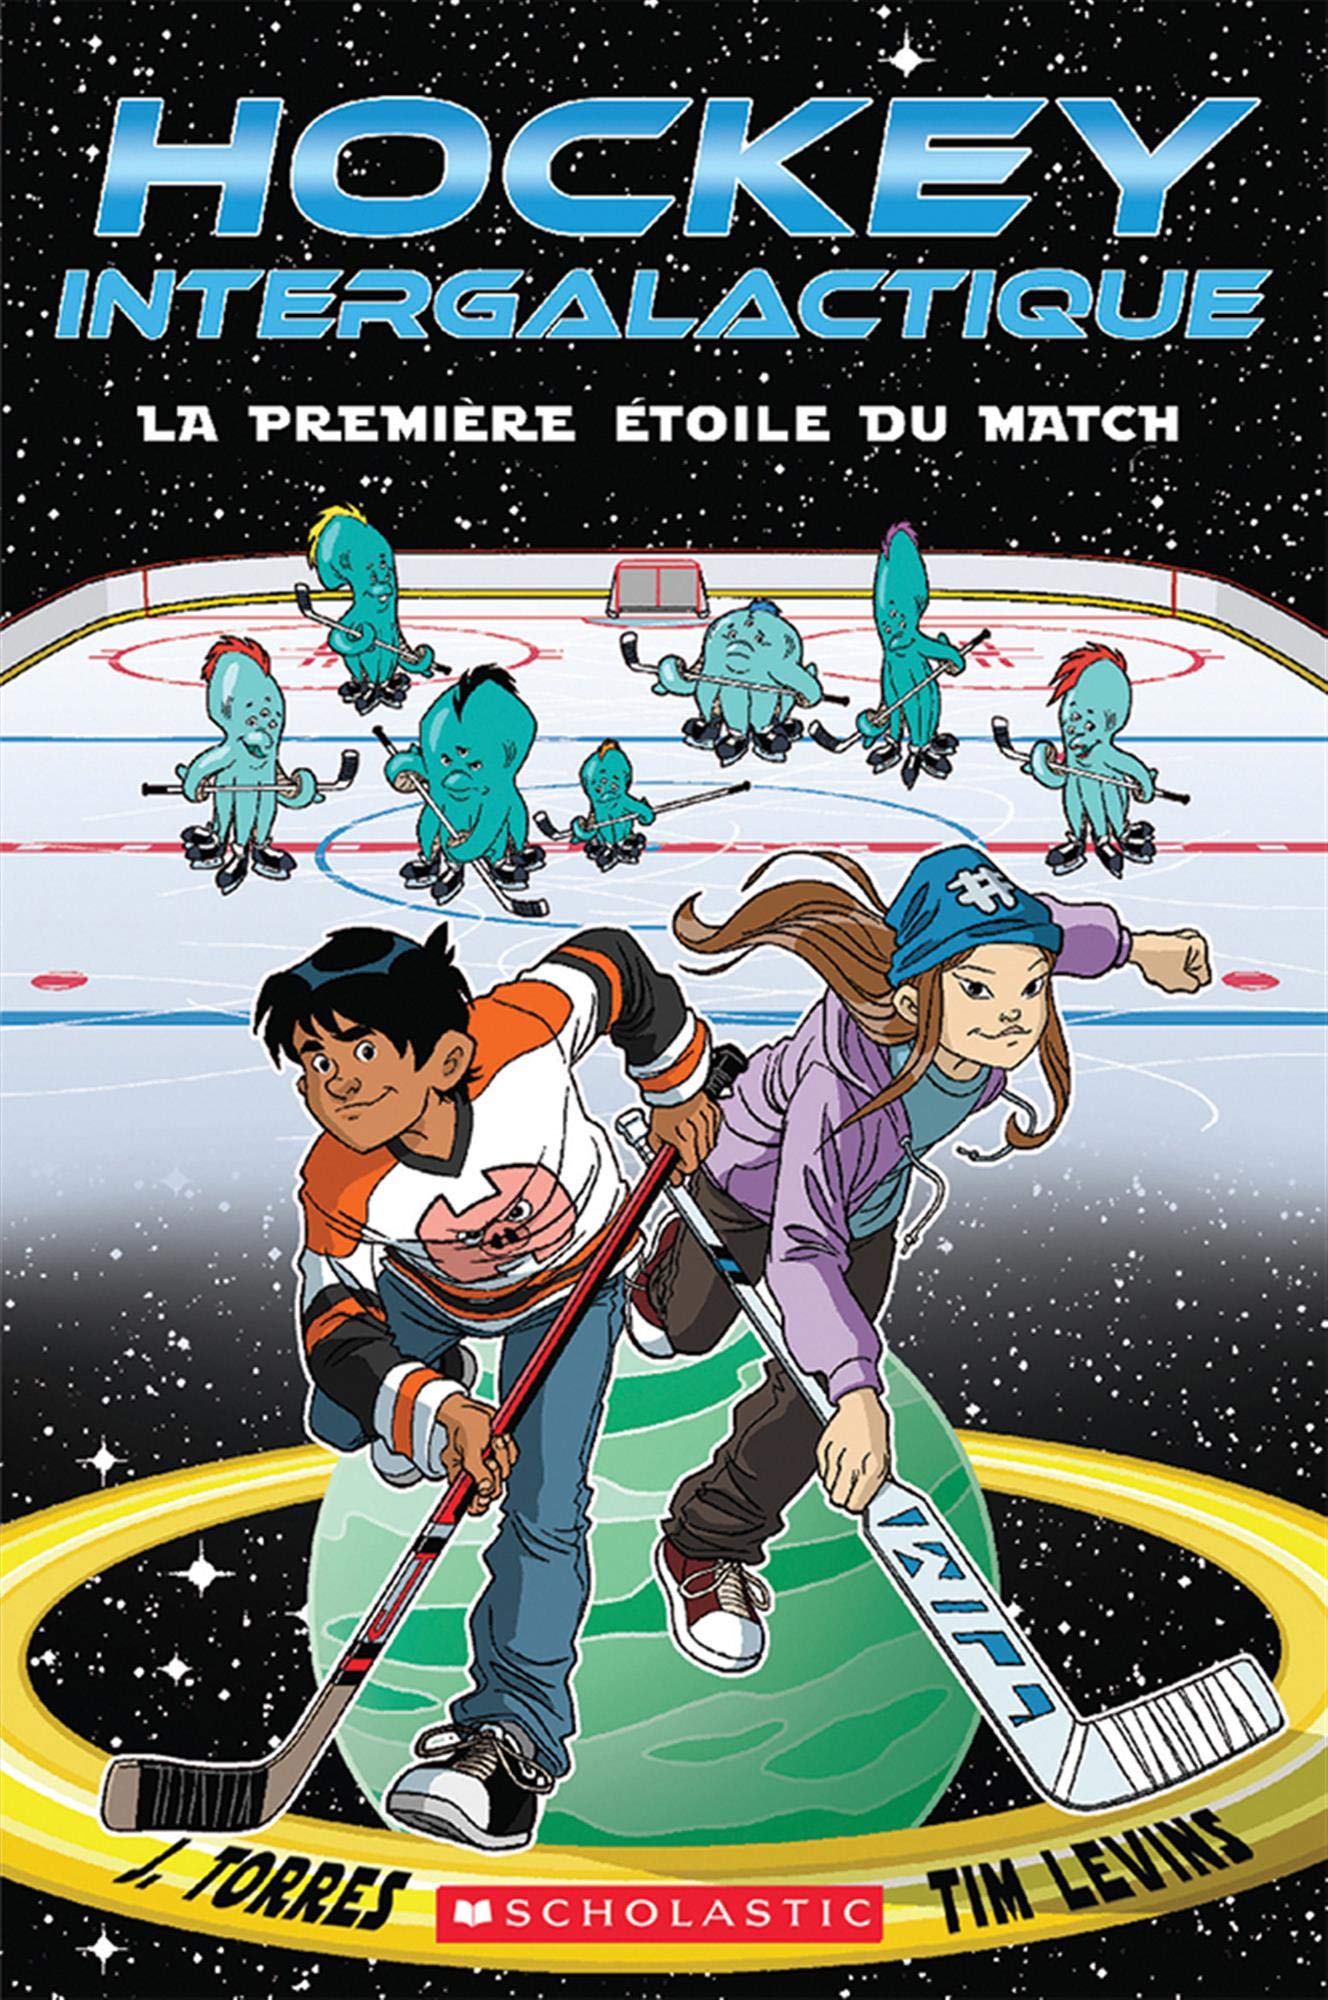 La Hockey Intergalactique: La Premiere Etoile